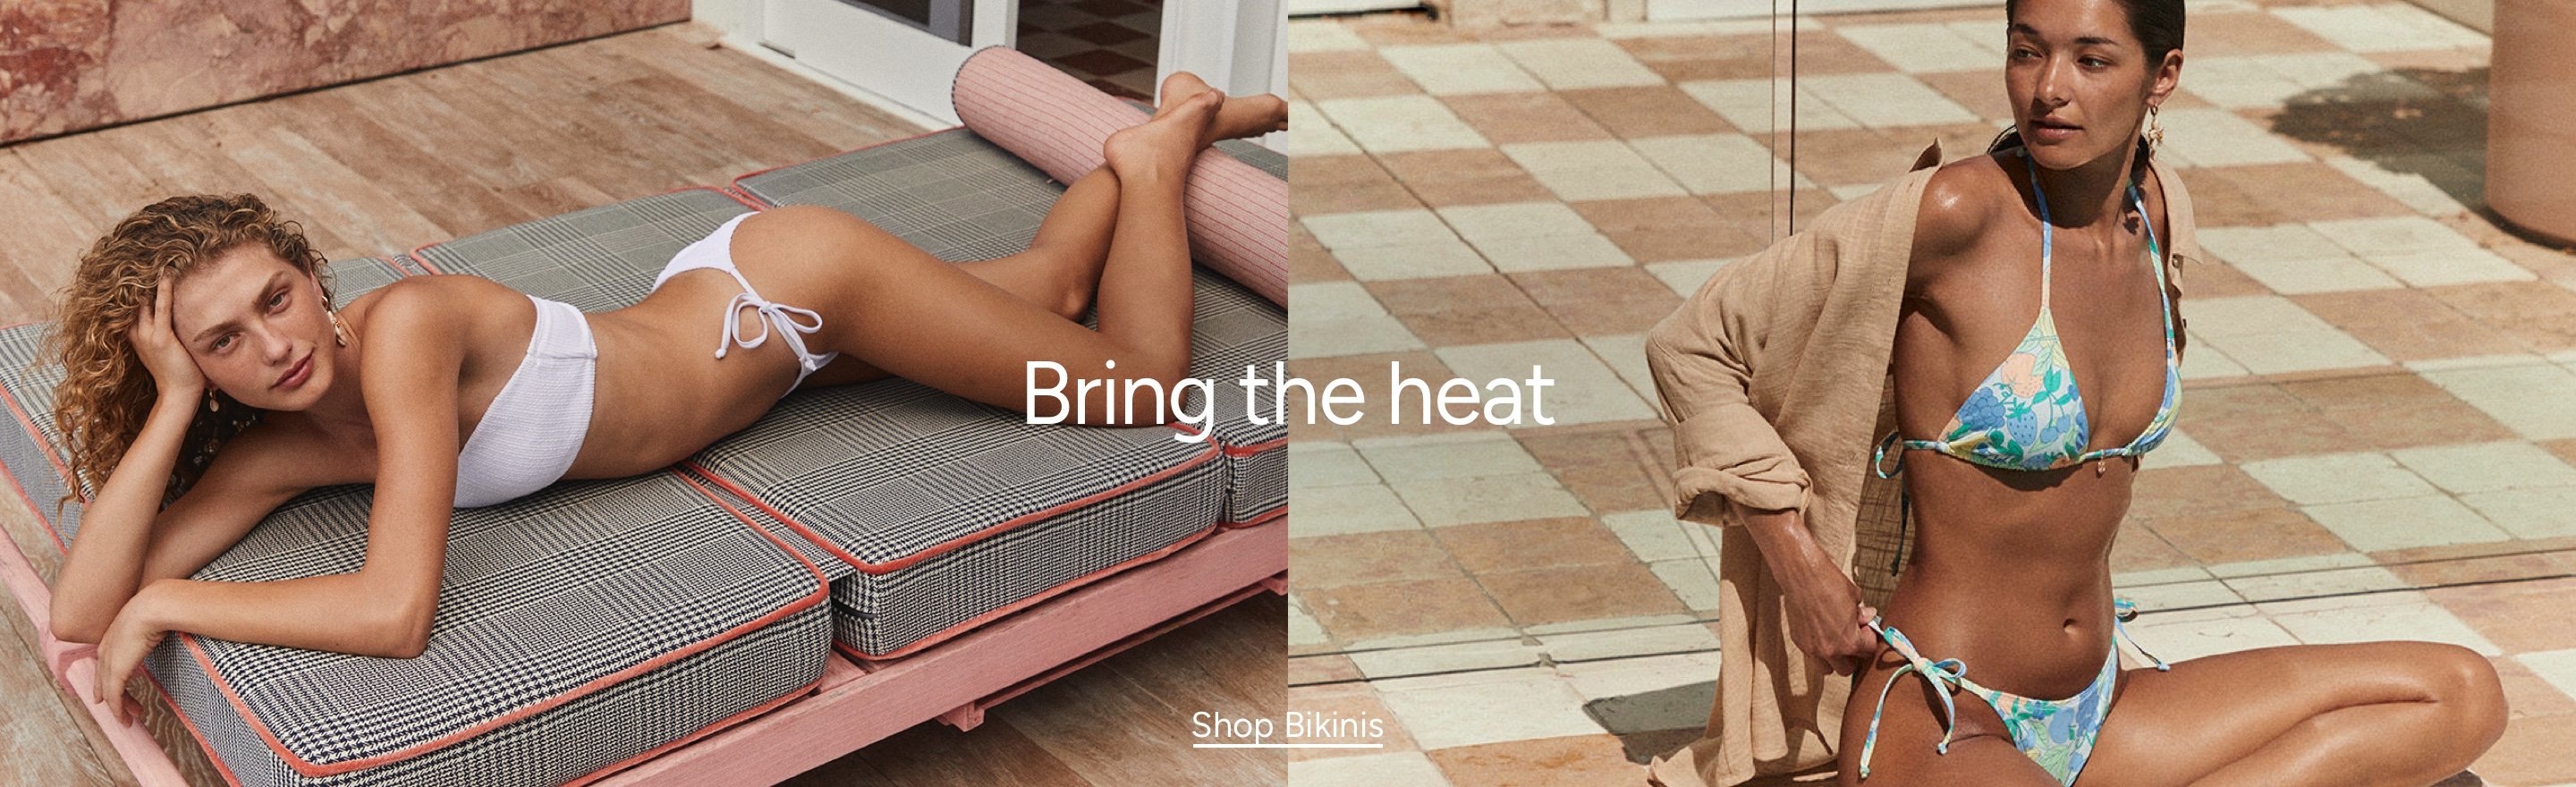 Bring the heat. Shop bikinis.